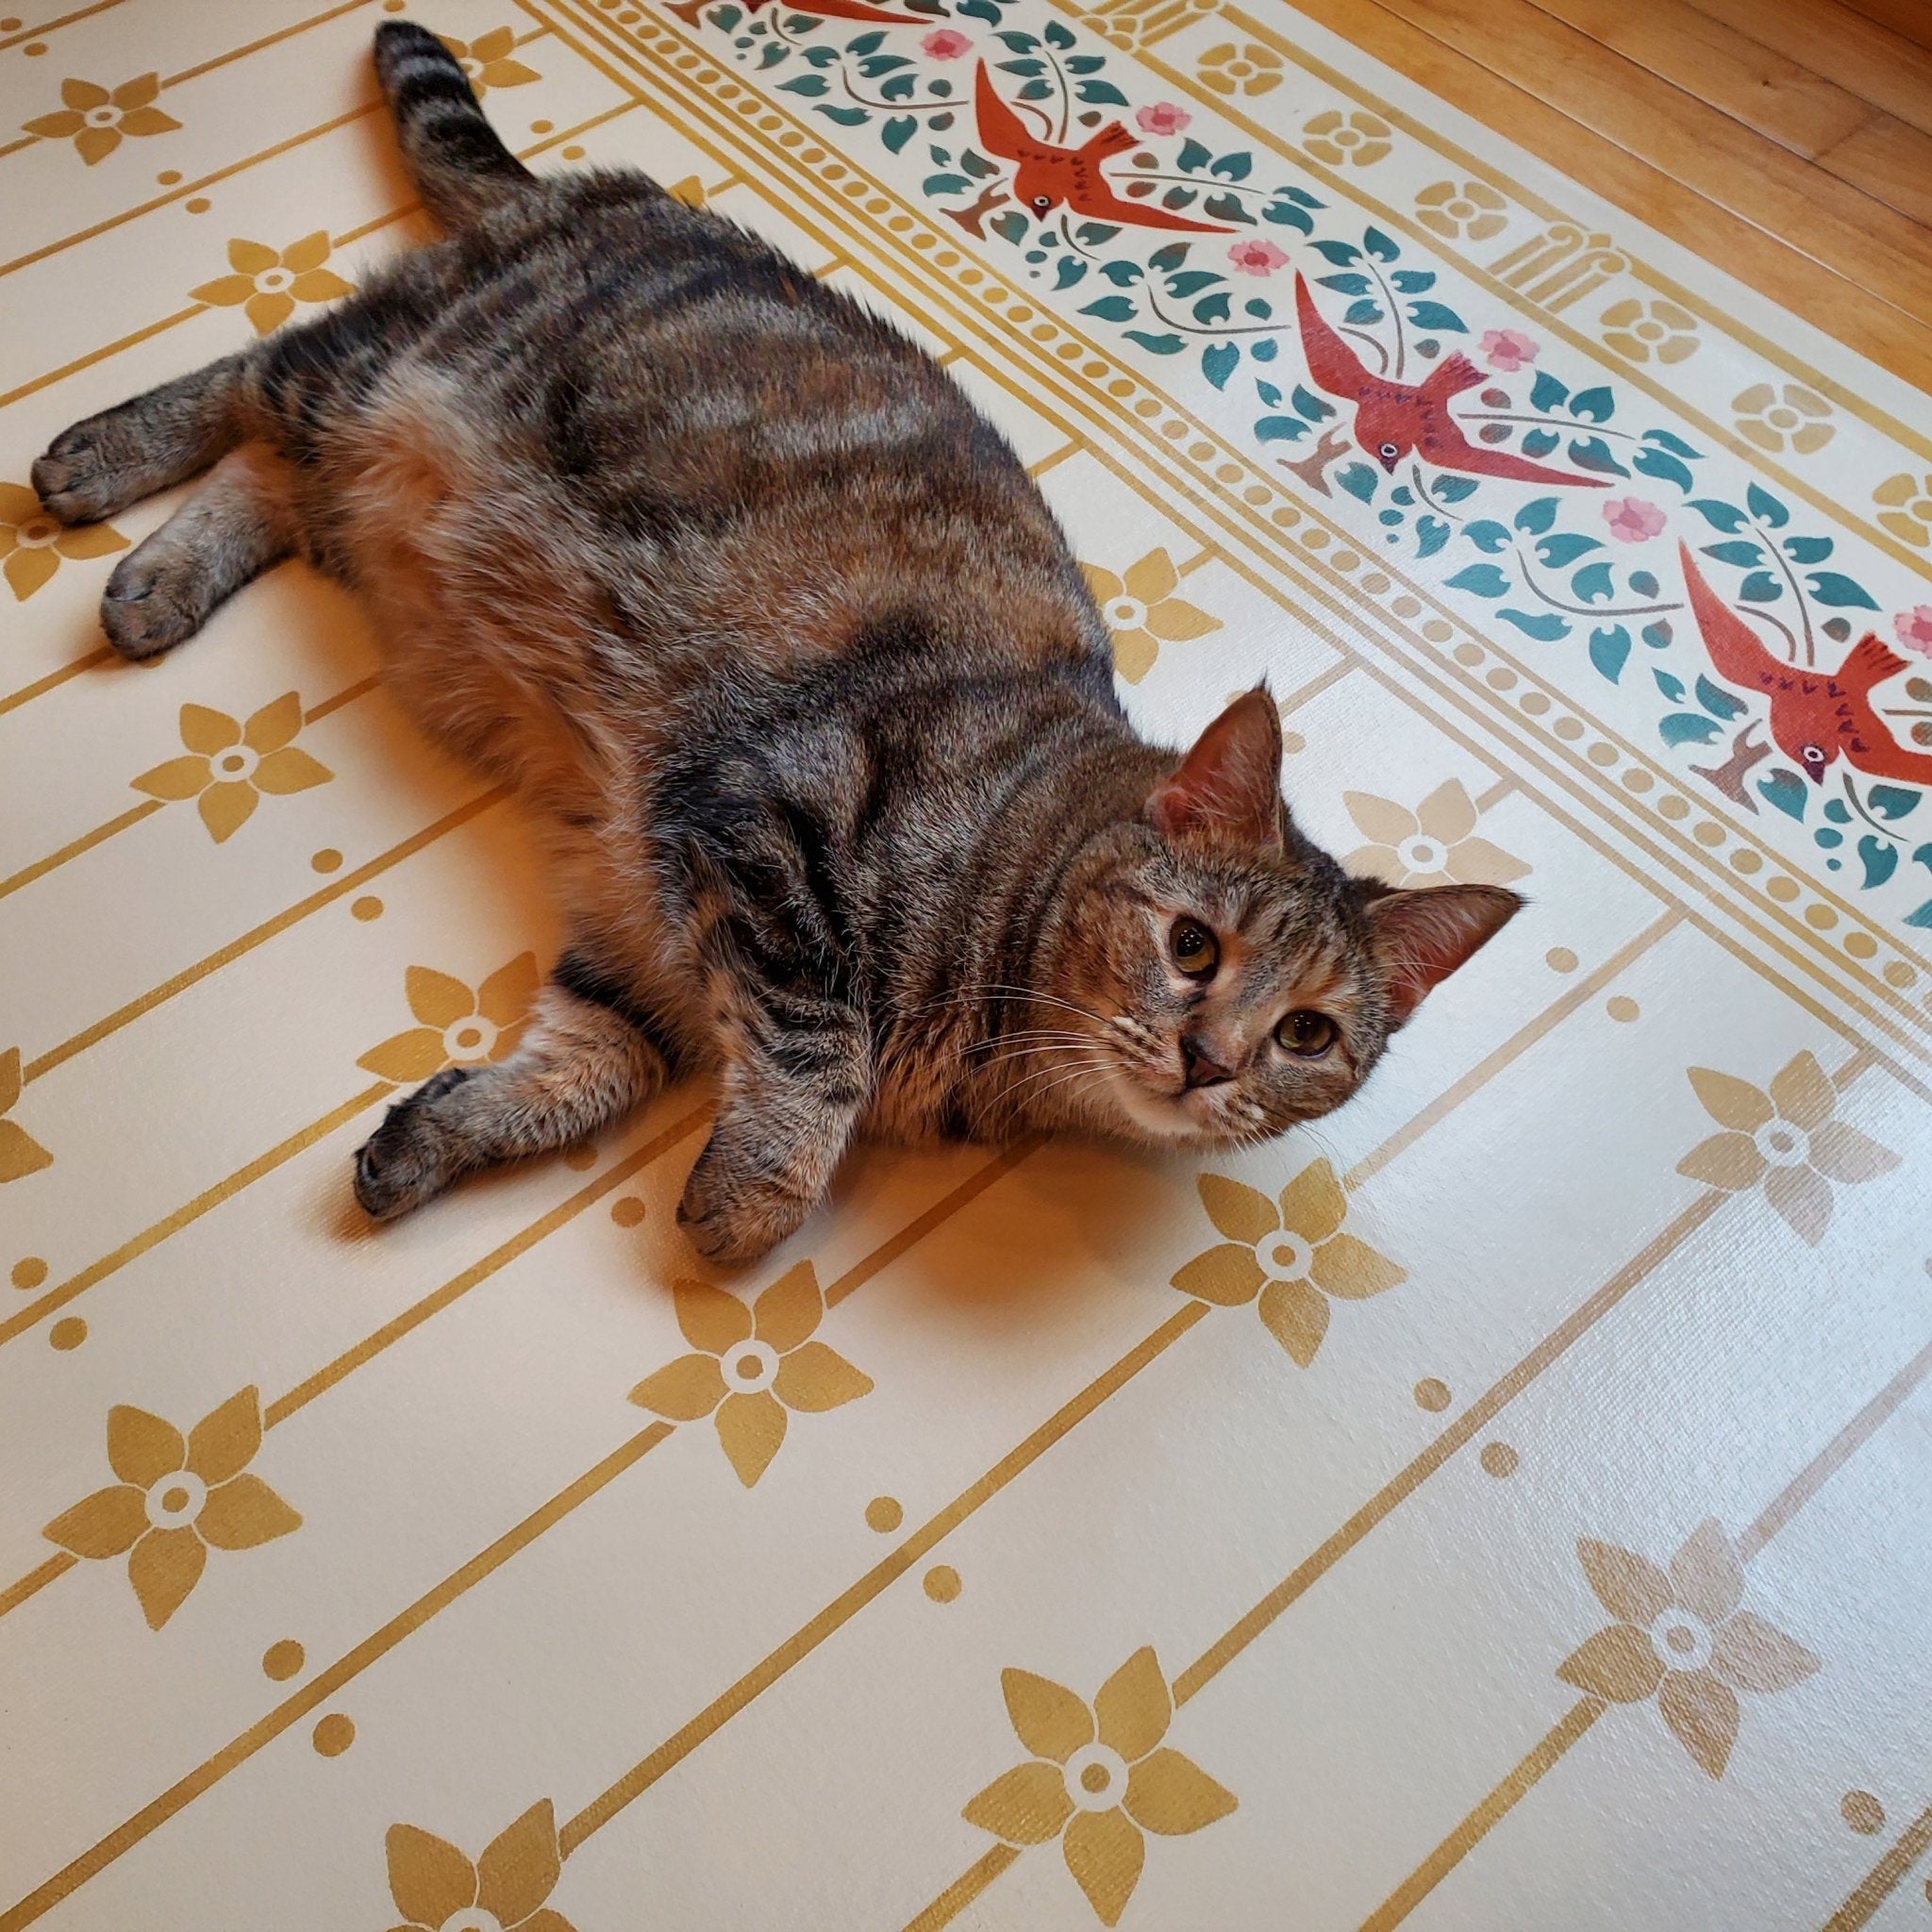 Jade The Cat getting comfortable on StarFlower Floorcloth #6!